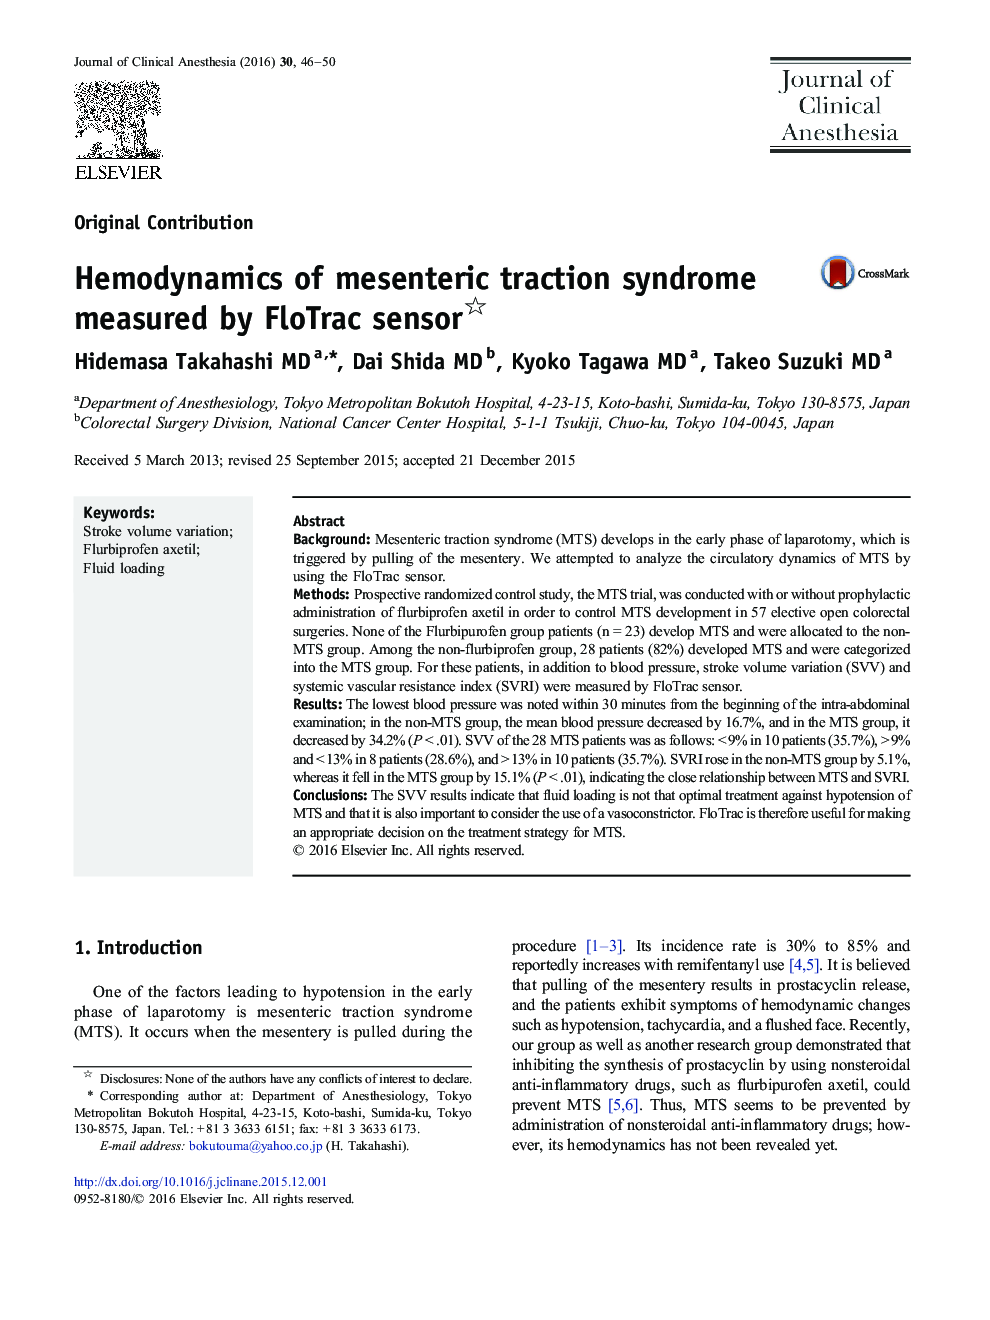 Original ContributionHemodynamics of mesenteric traction syndrome measured by FloTrac sensor